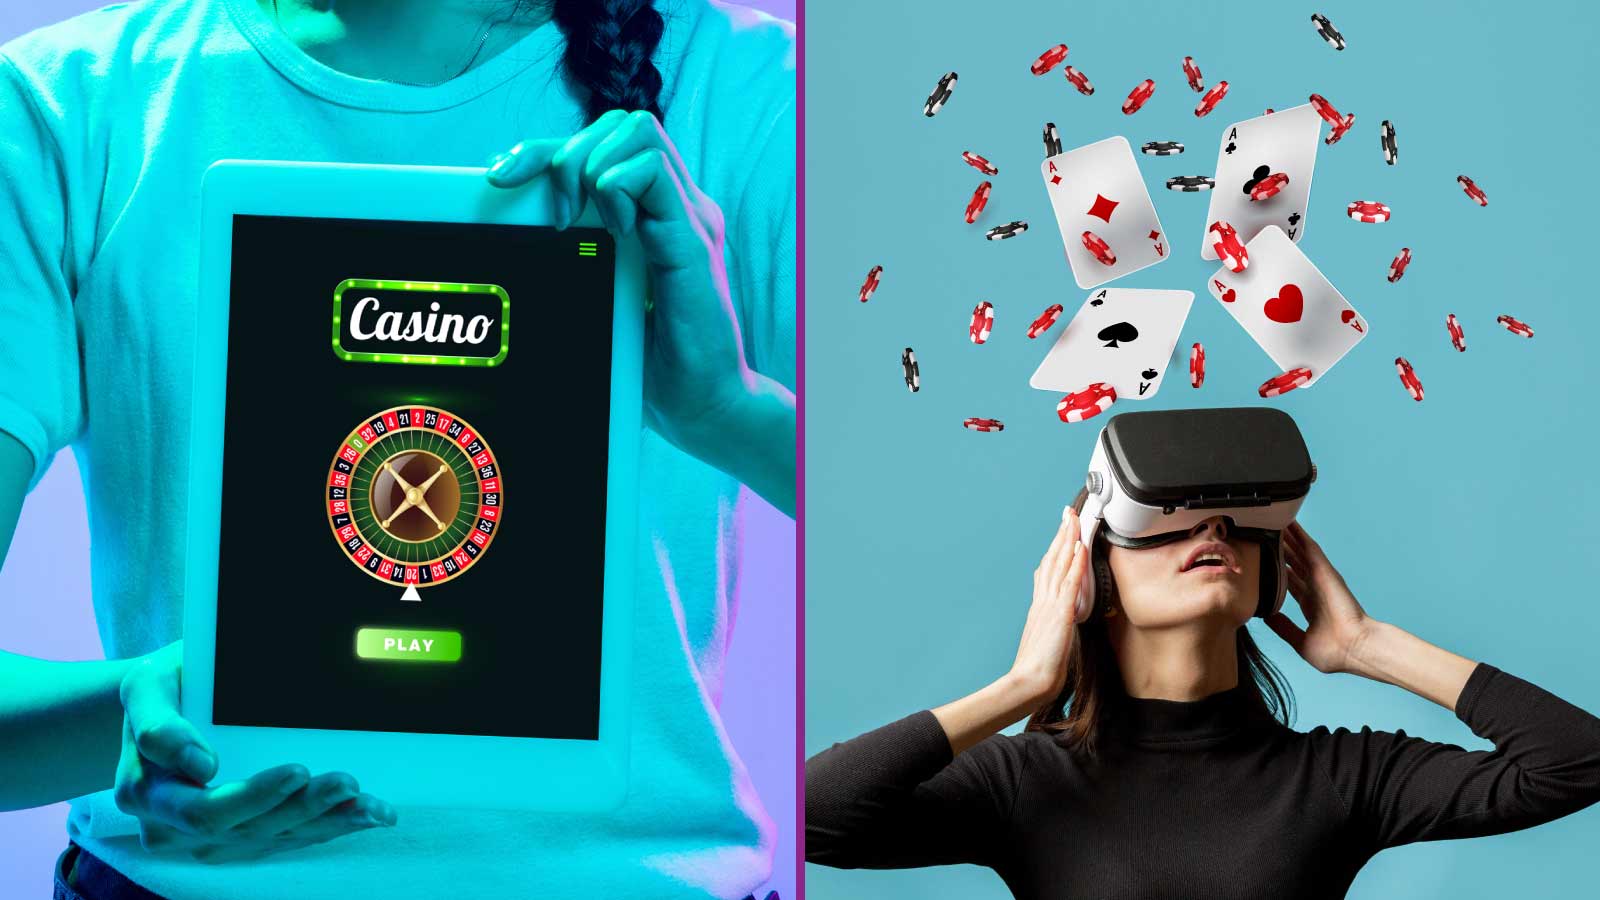 Are VR casinos better than 2D casinos